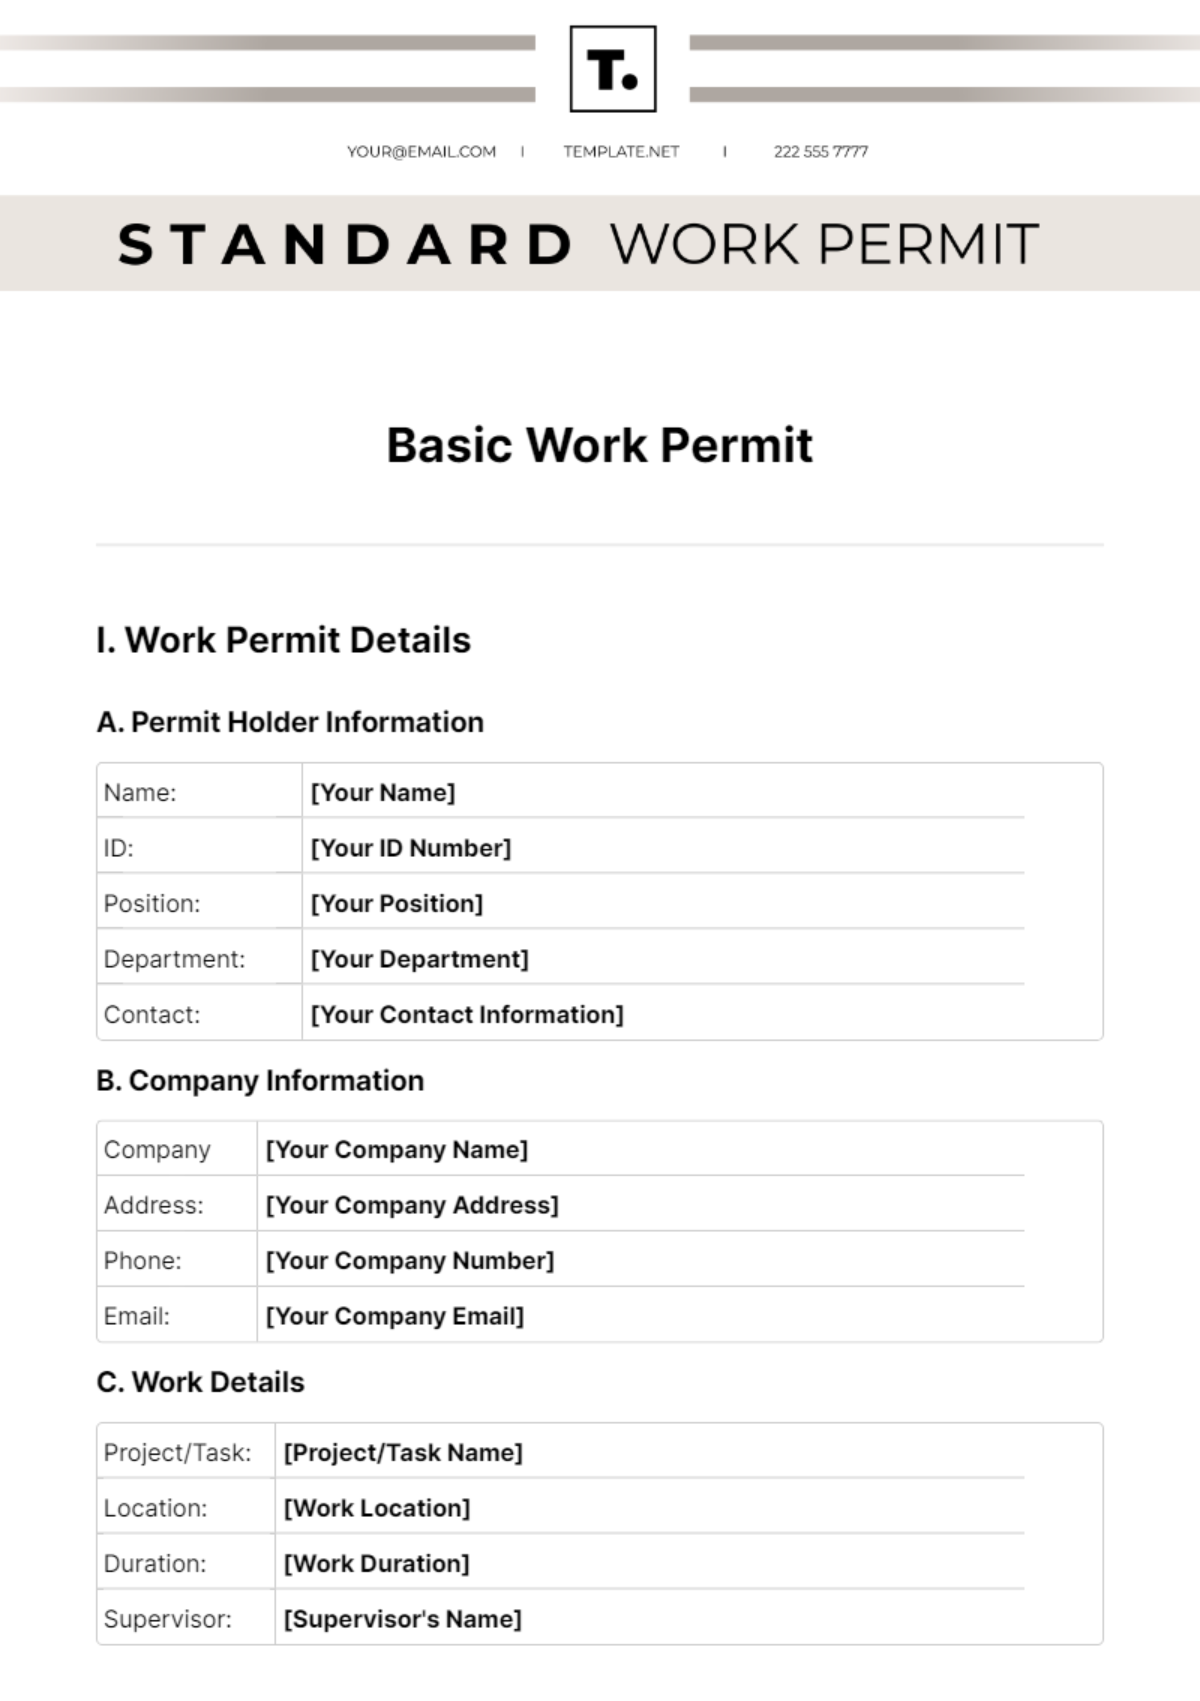 Basic Work Permit Template